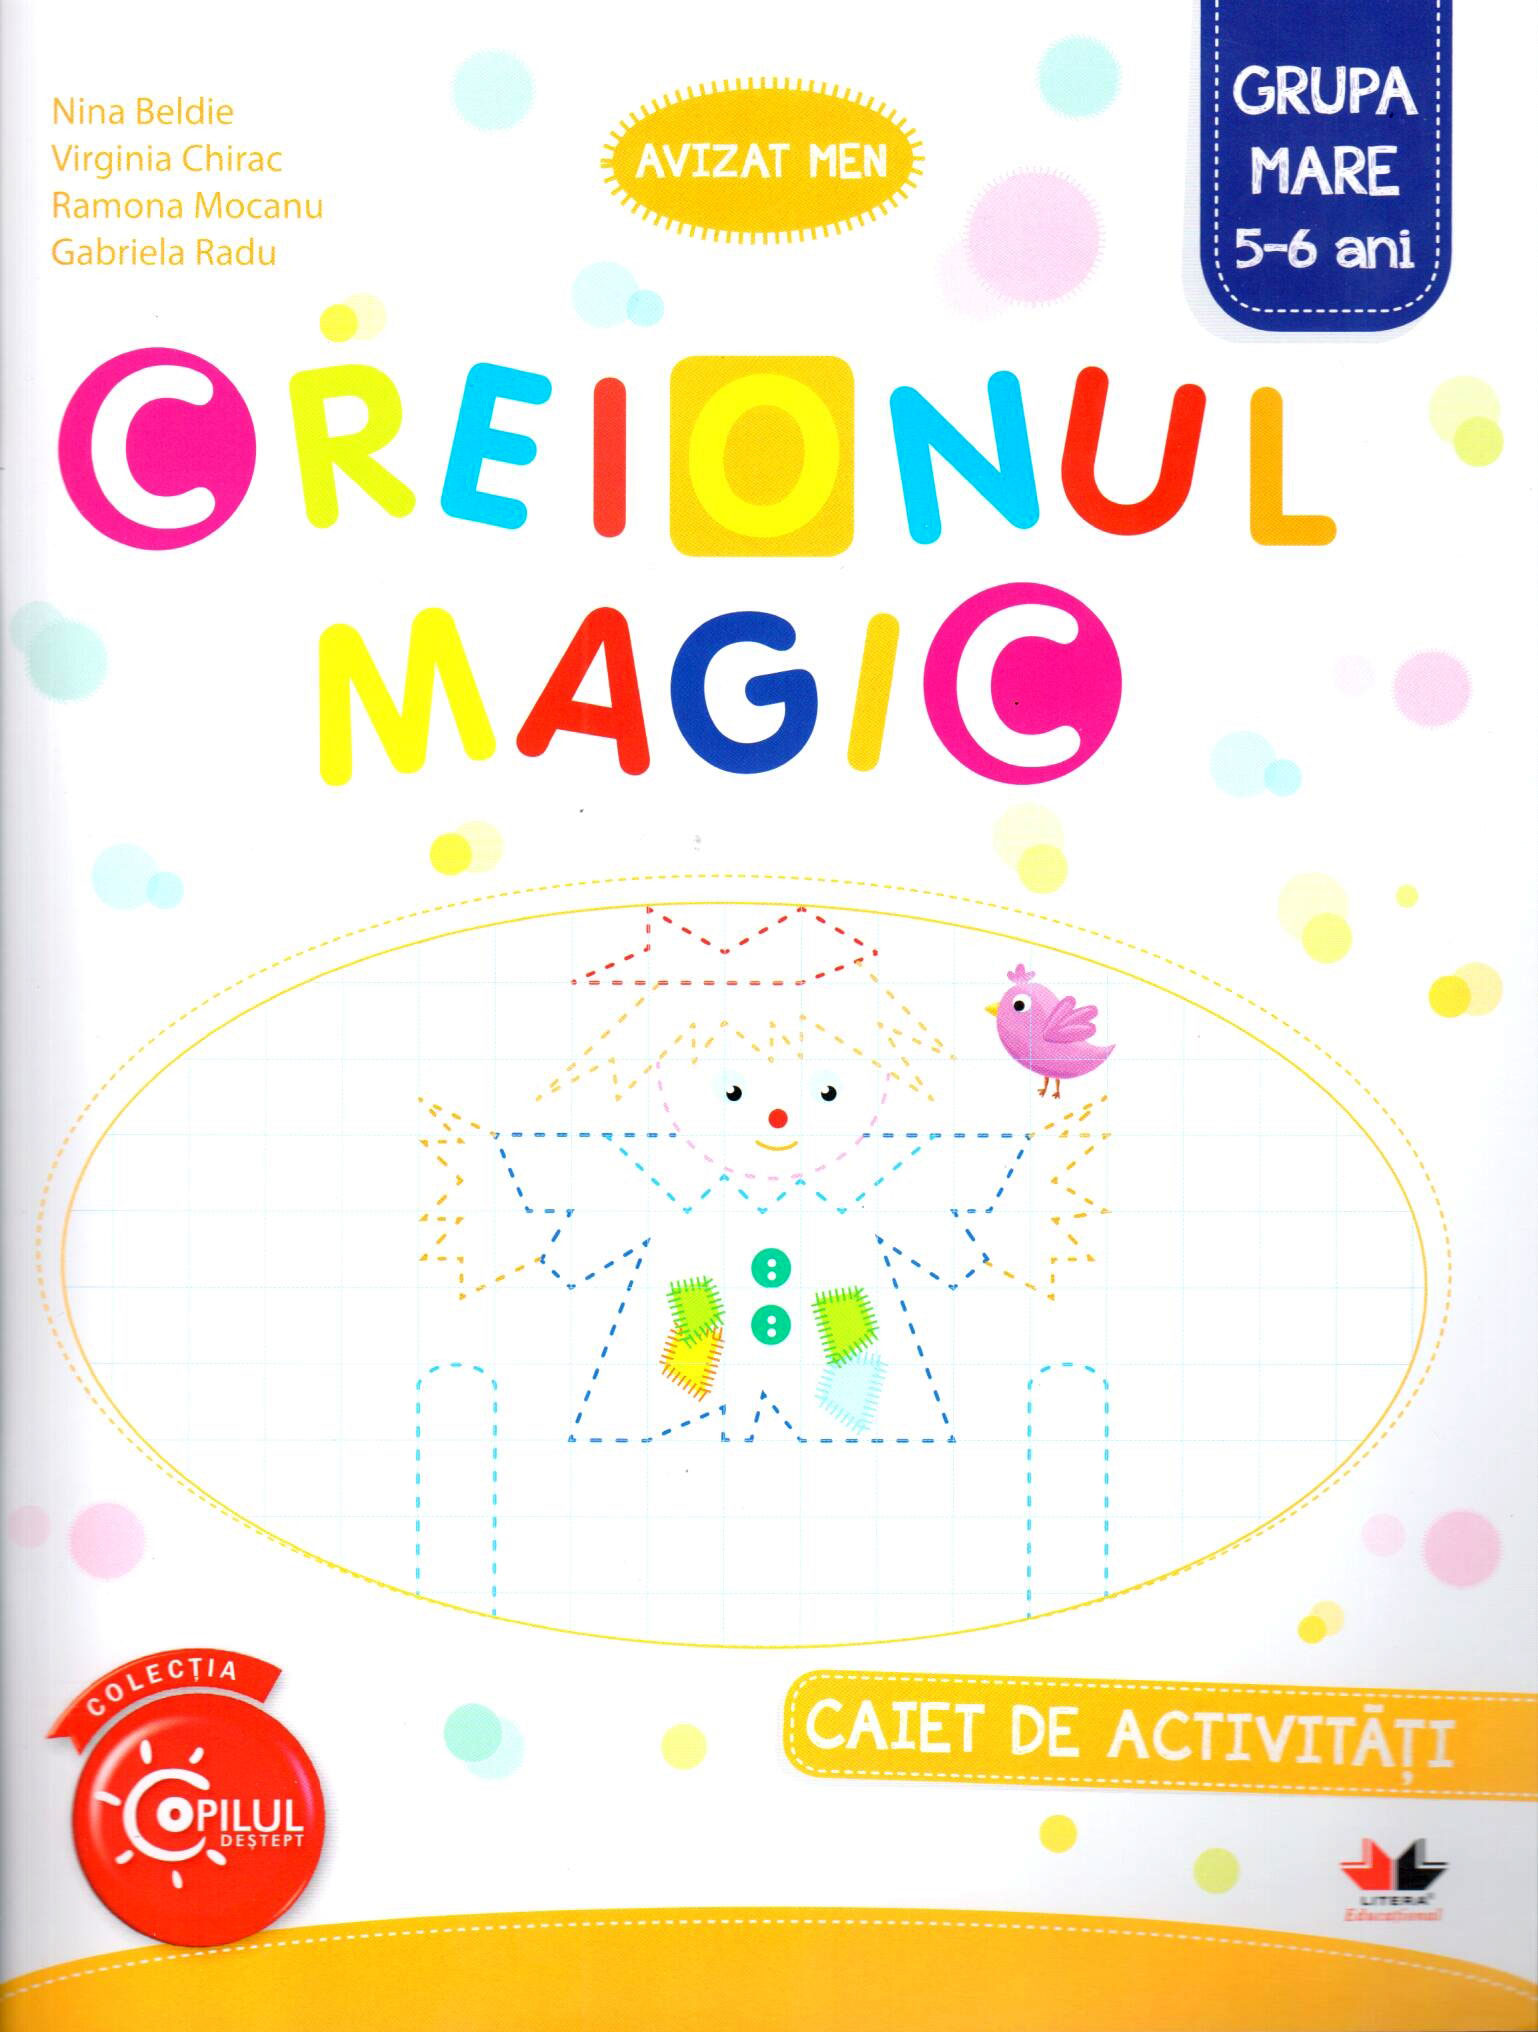 Creionul magic - Caiet de activitati - Grupa mare 5-6 ani | Nina Beldie, Virginia Chirac, Ramona Radu, Gabriela Radu